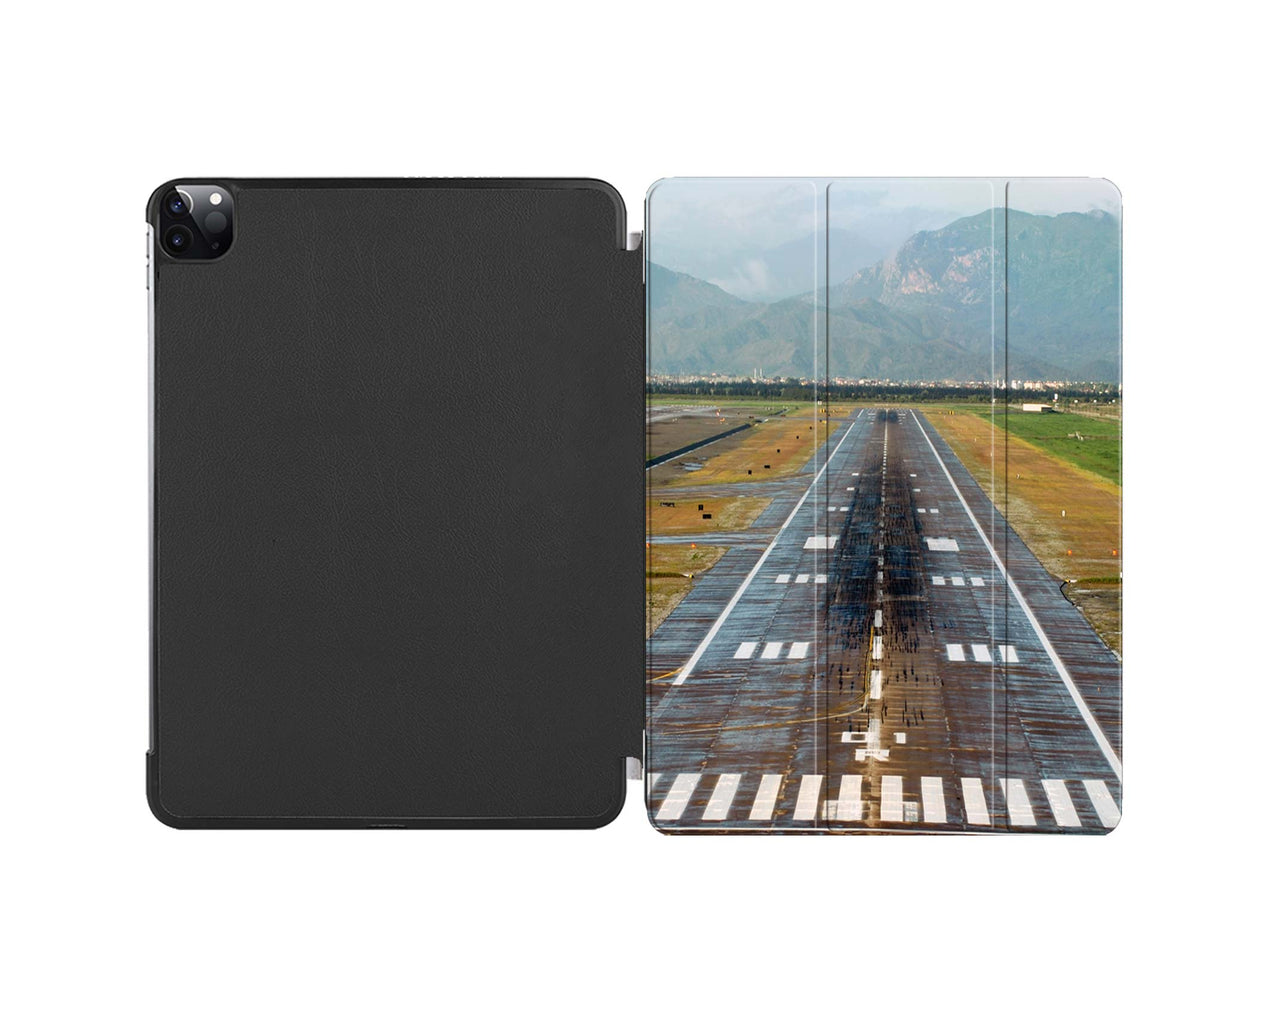 Amazing Mountain View & Runway Designed iPad Cases